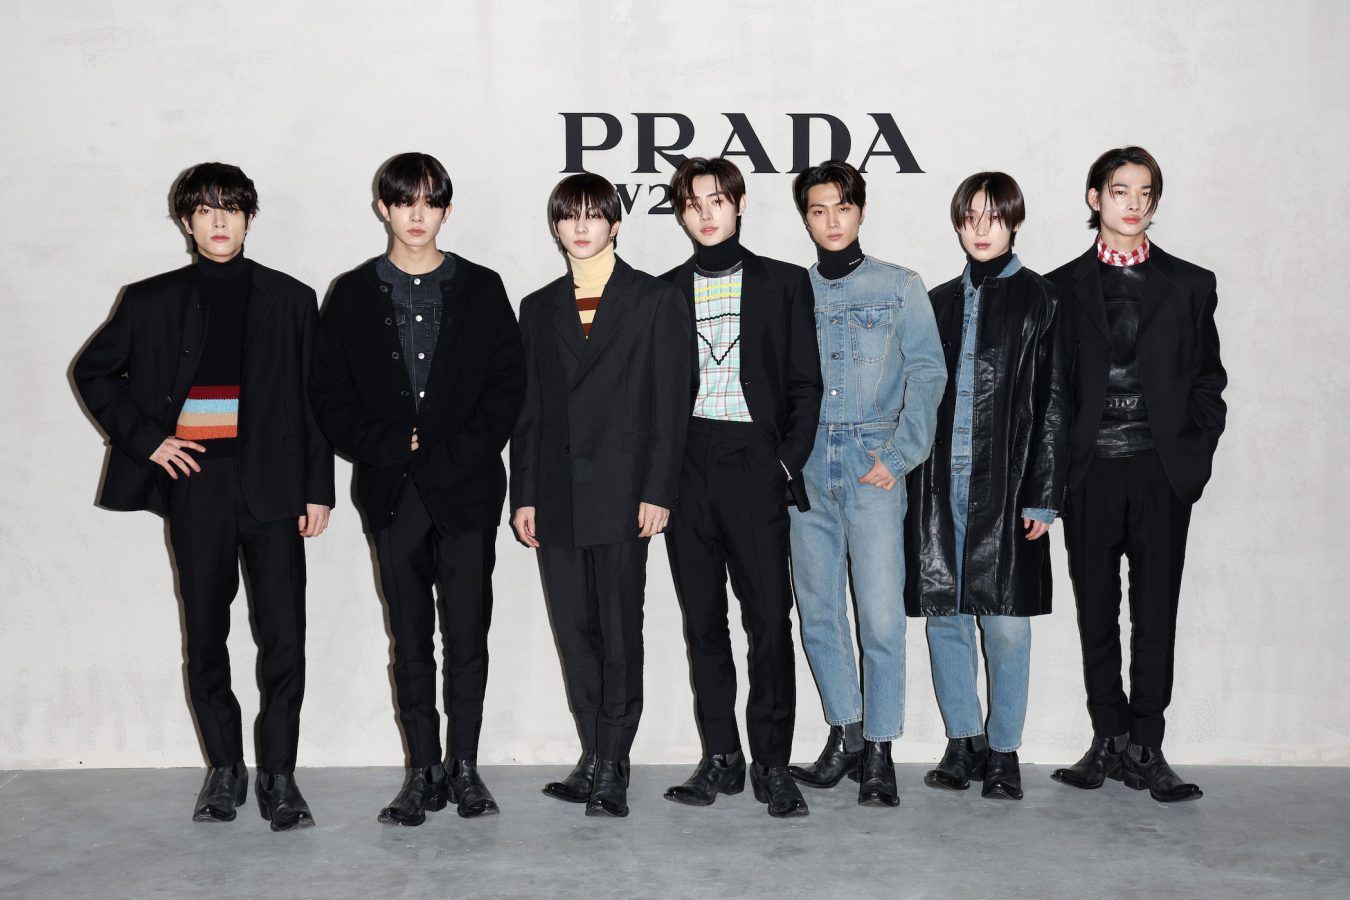 Prada welcomes ENHYPEN as the new brand ambassador